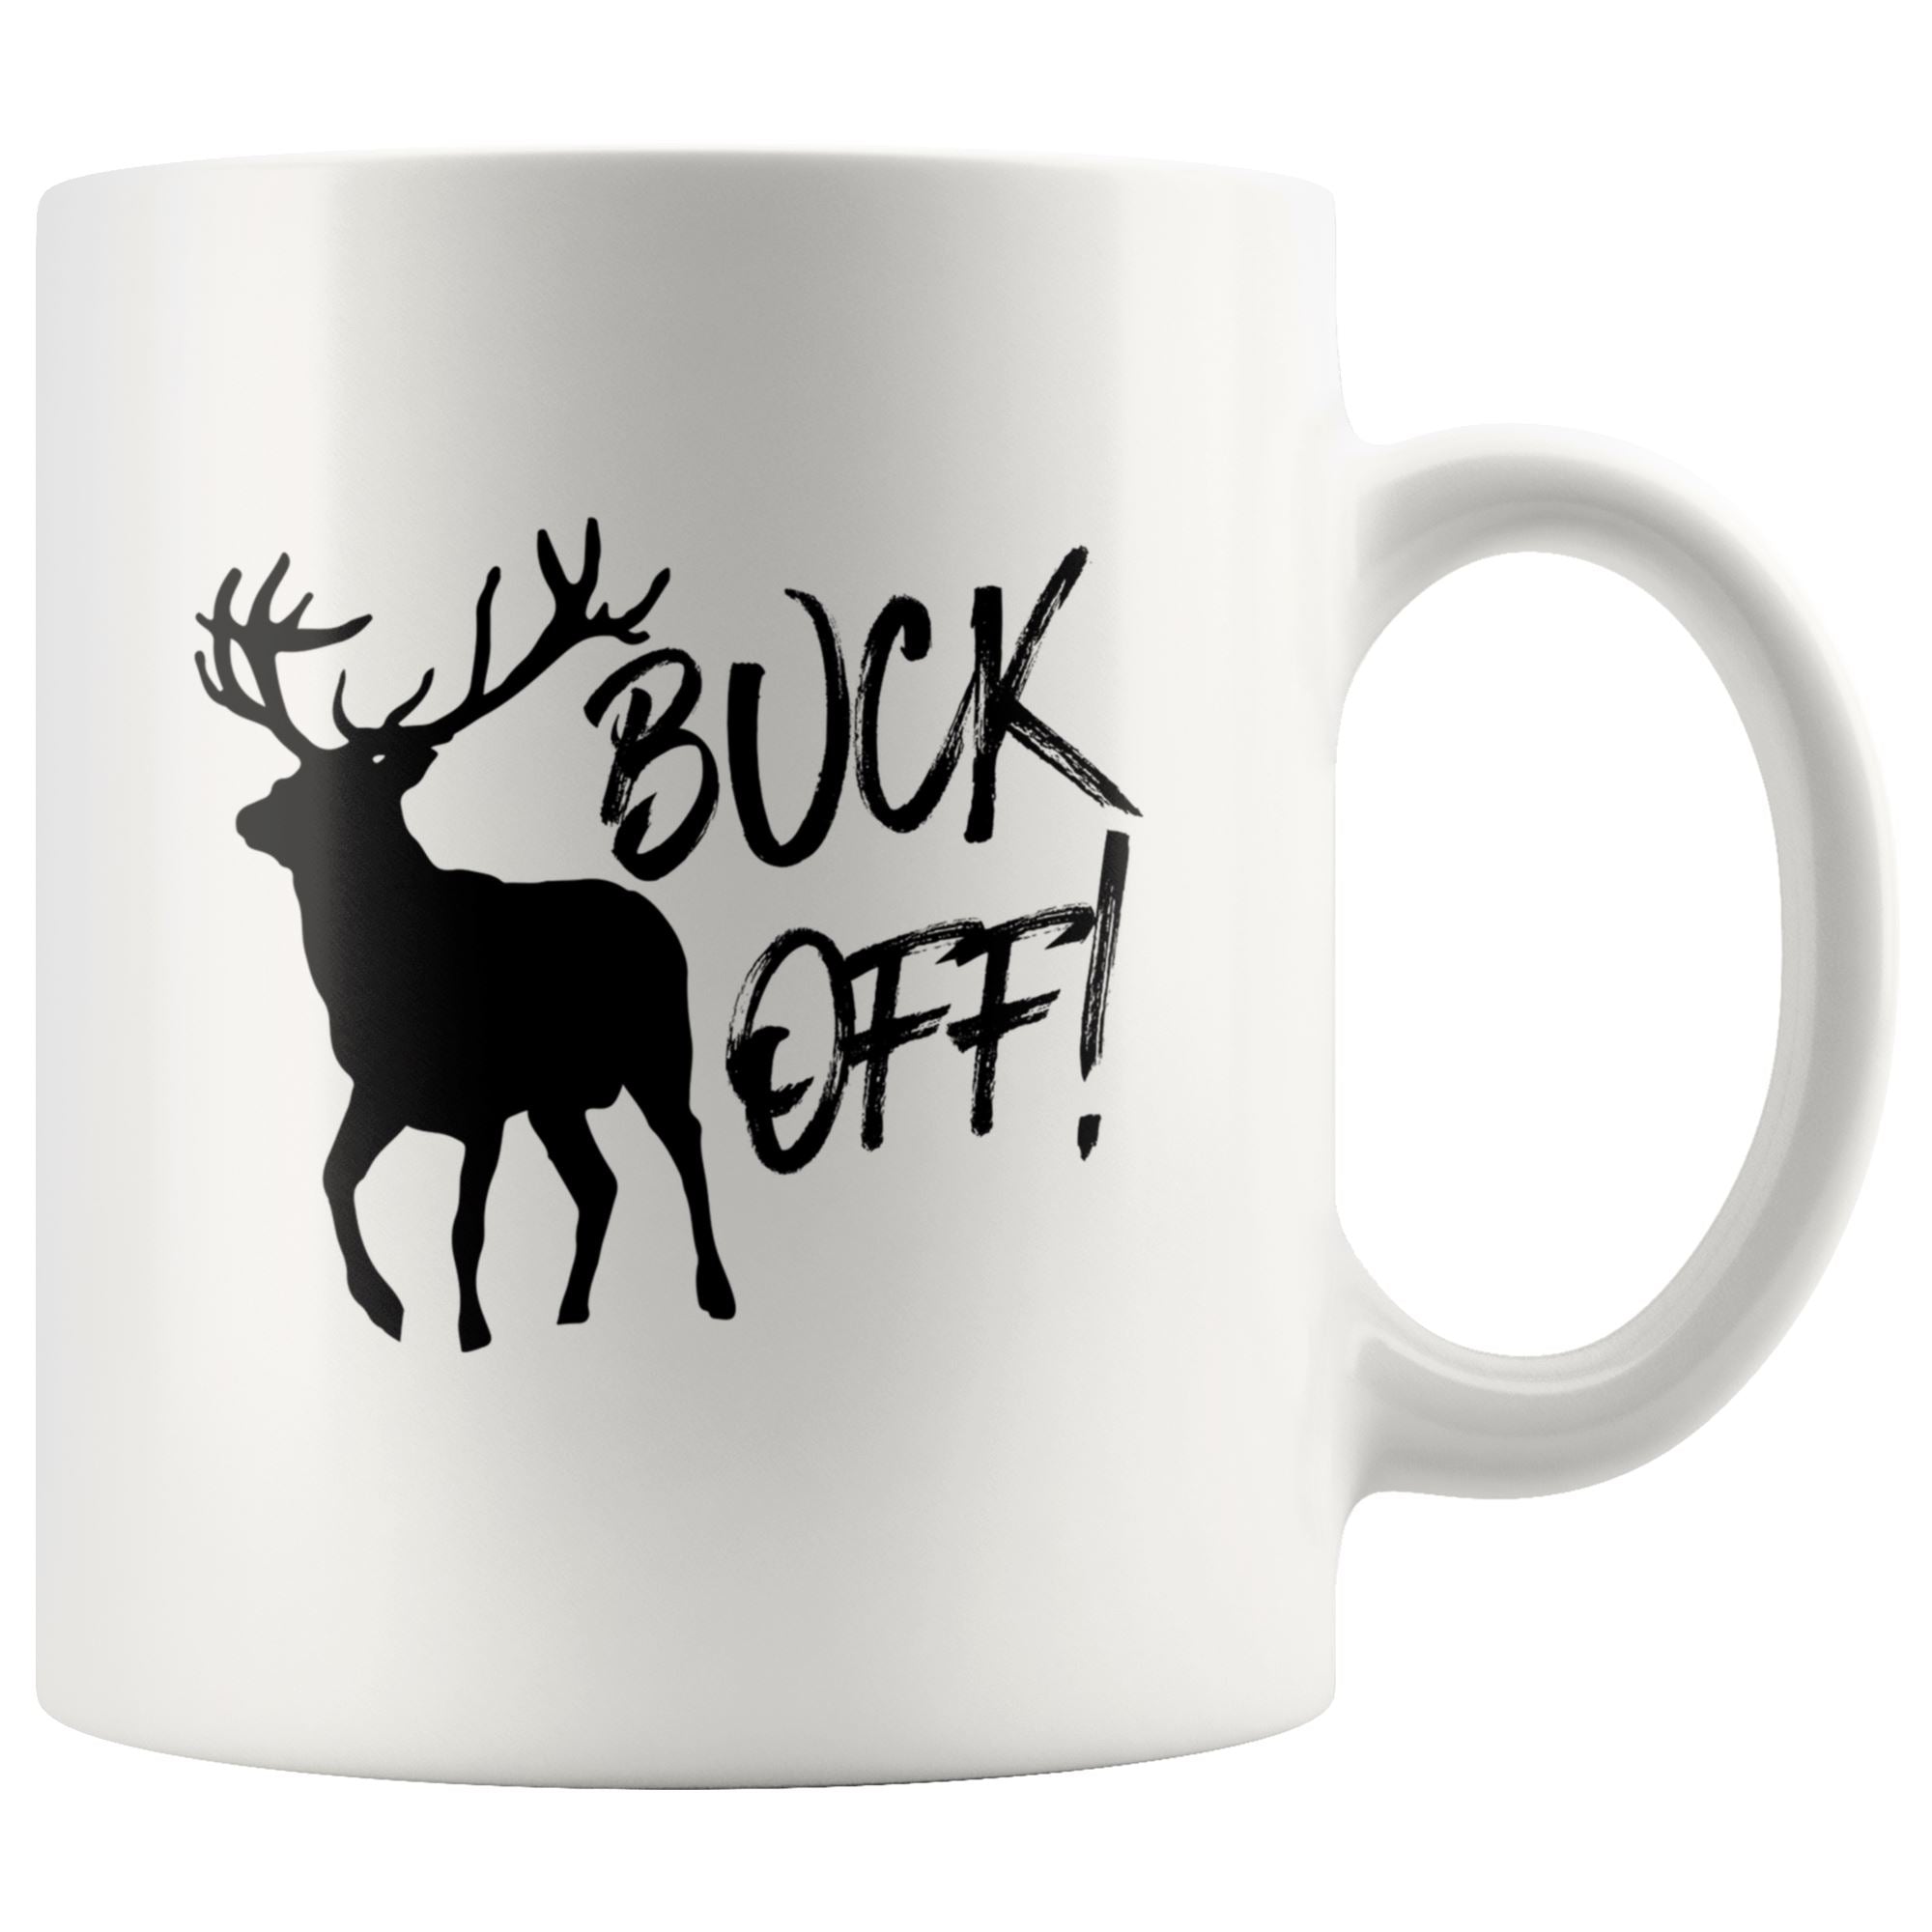 Buck Off Drinkware teelaunch 11oz Mug 